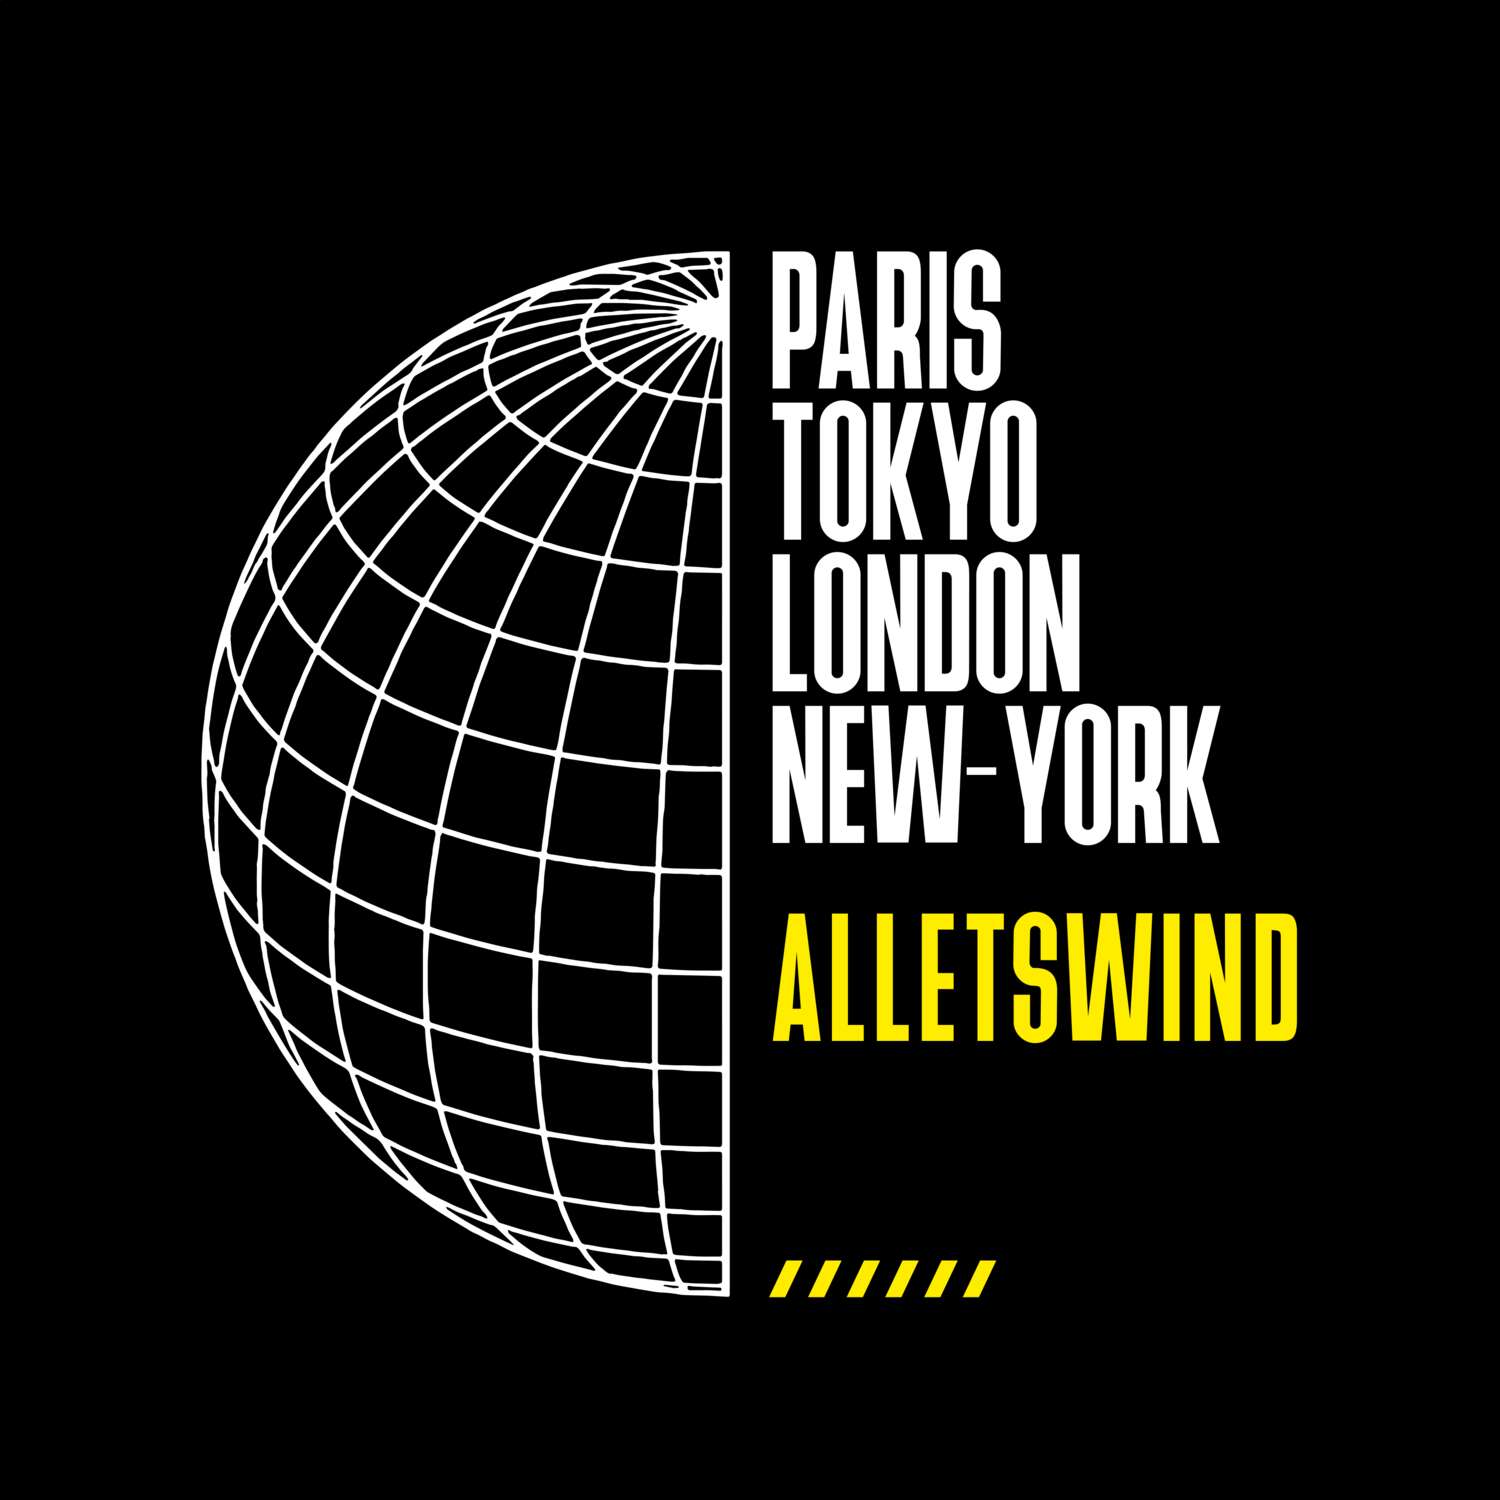 Alletswind T-Shirt »Paris Tokyo London«